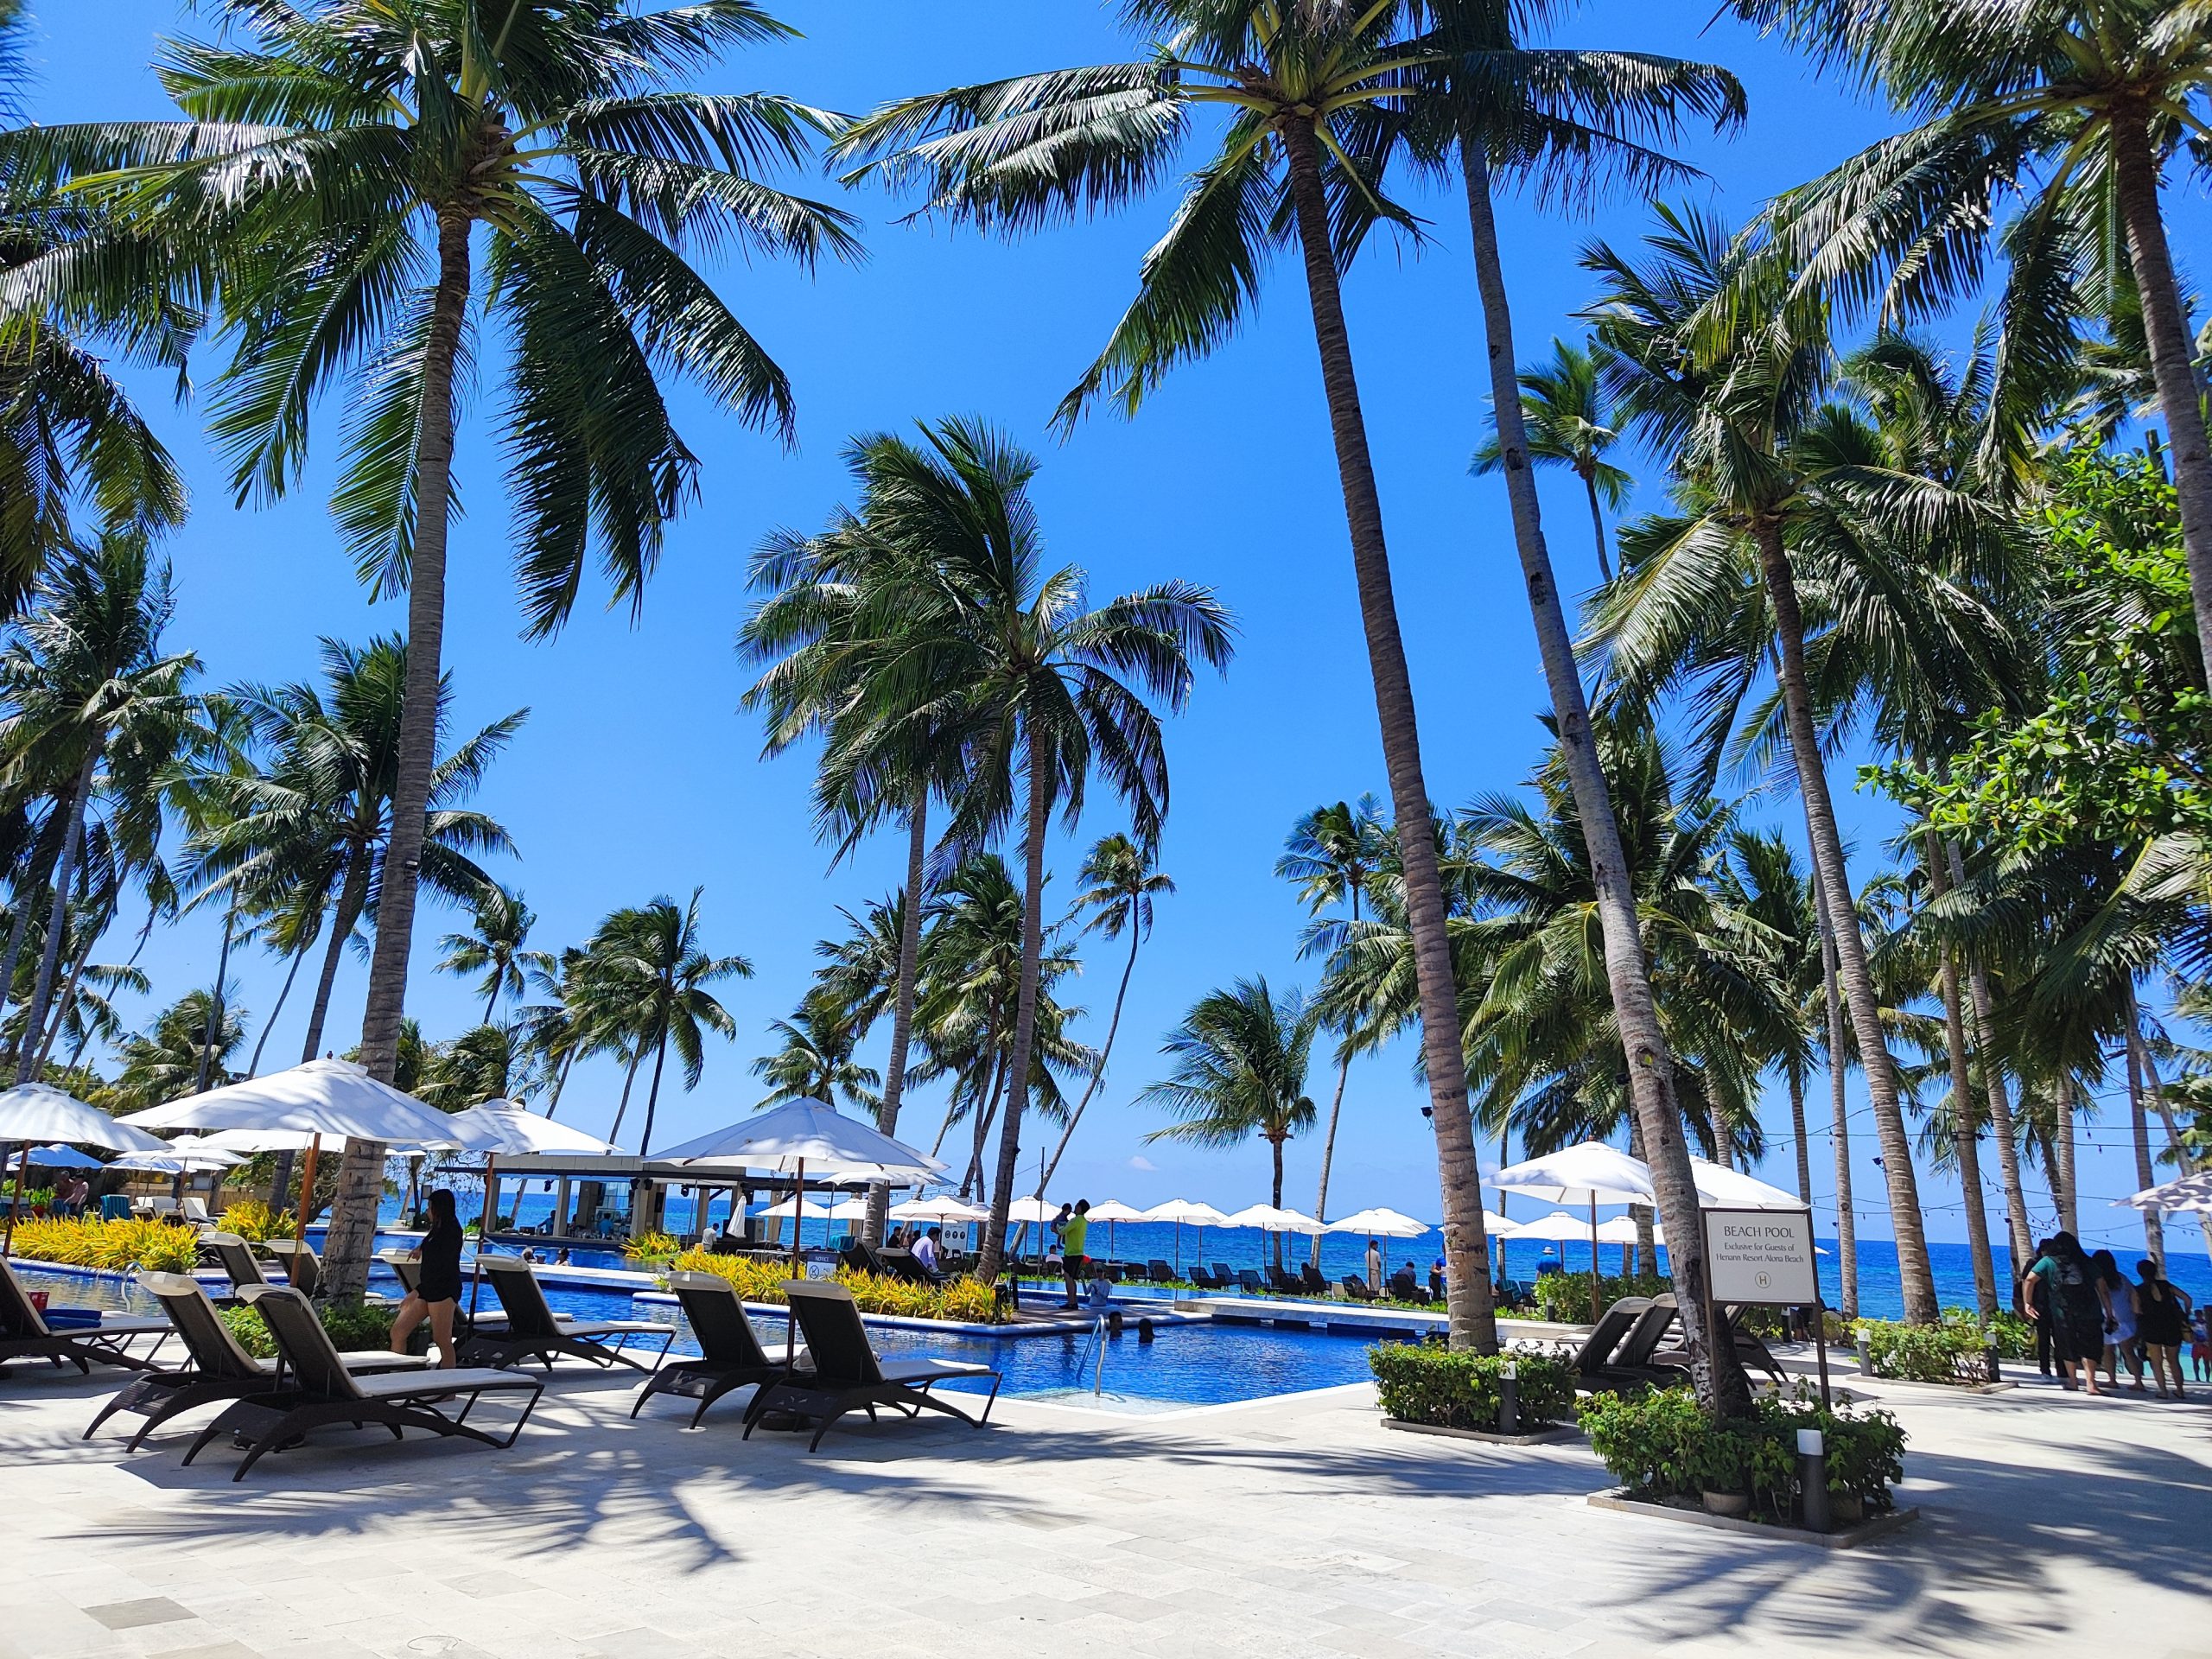 ASW Global Philippines Company Trip at Henan Resort in Bohol